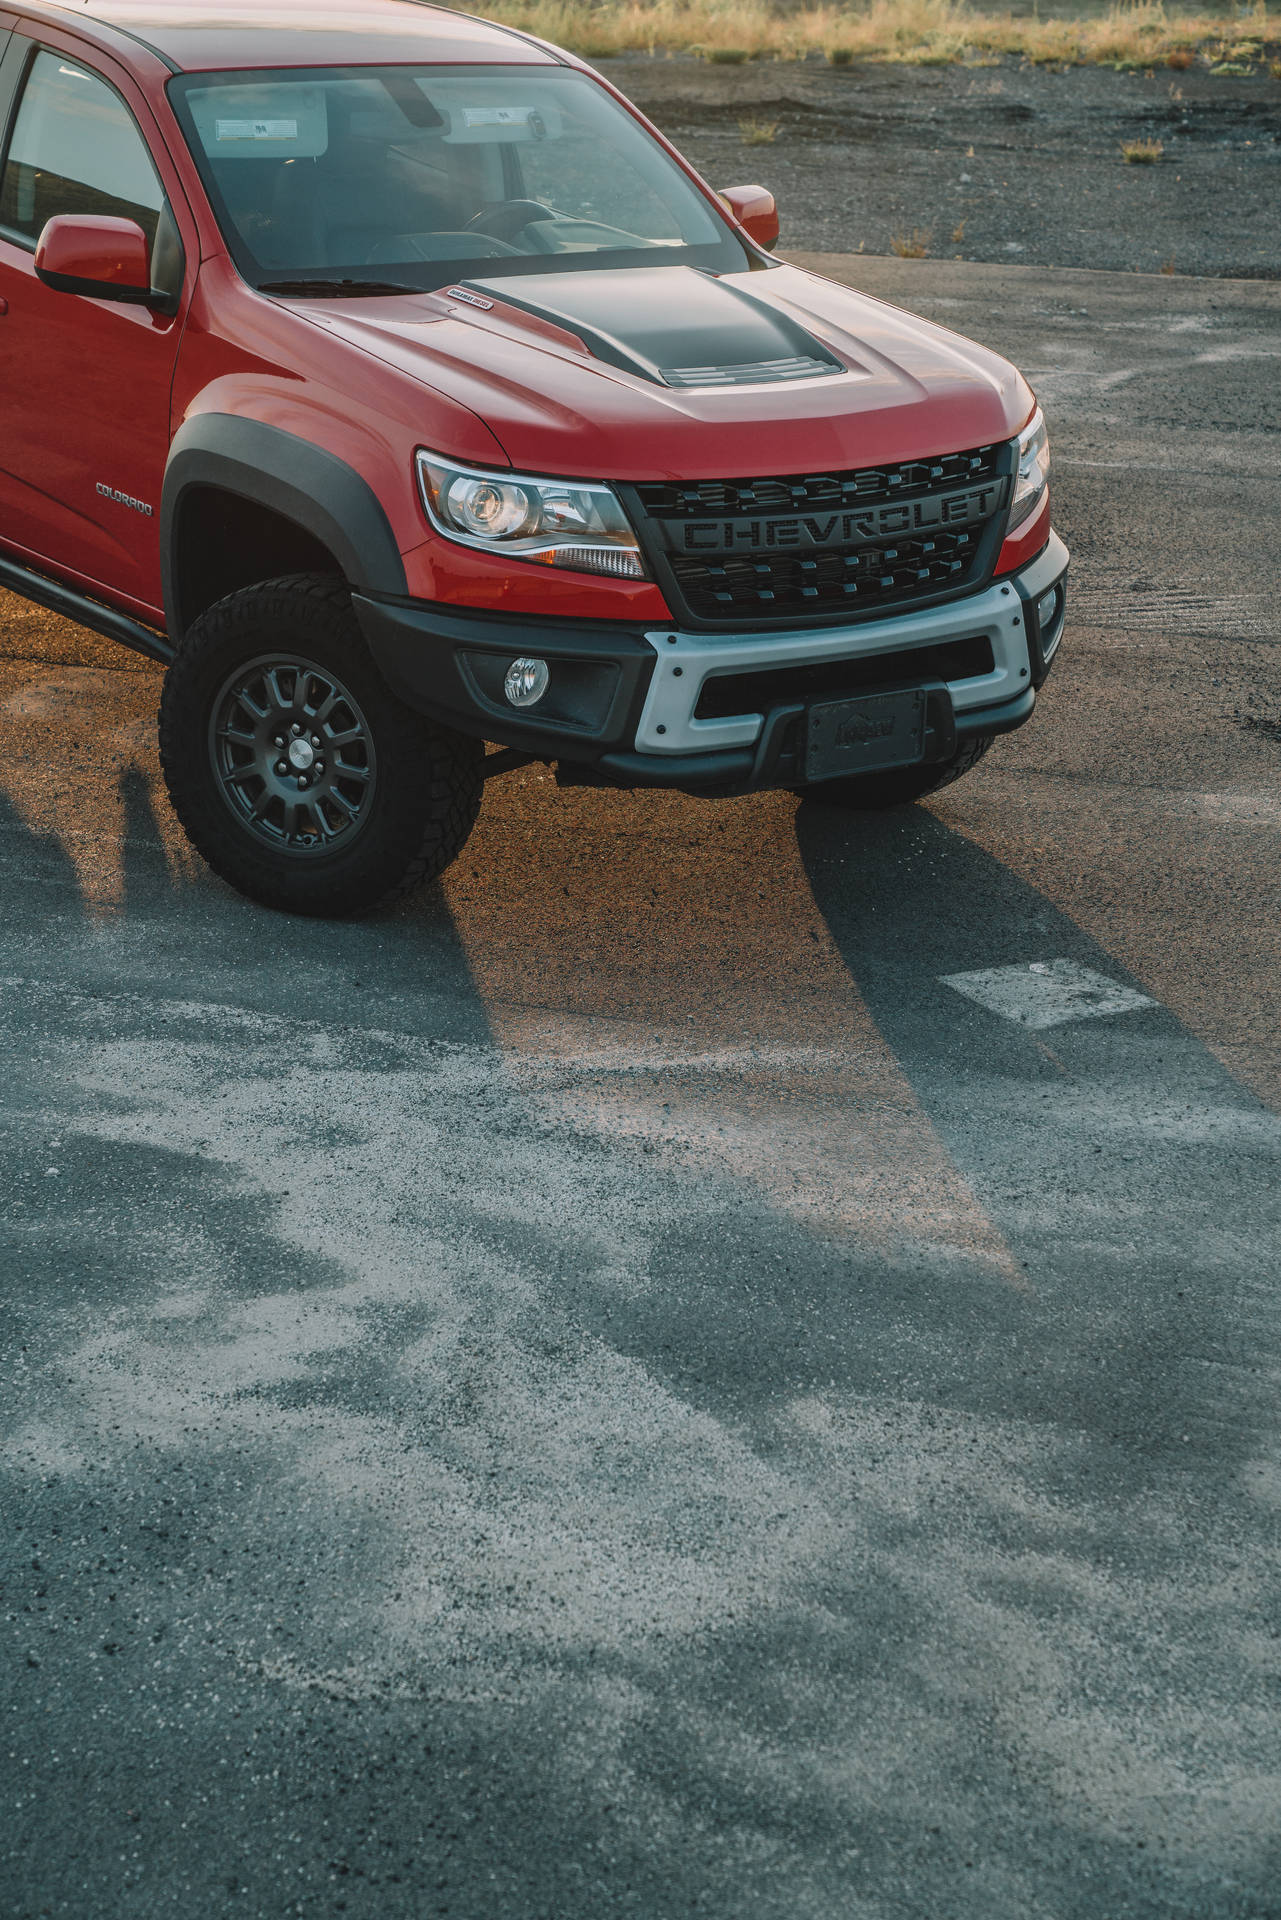 Chevrolet Colorado Zr2 Bison Photoshoot Background